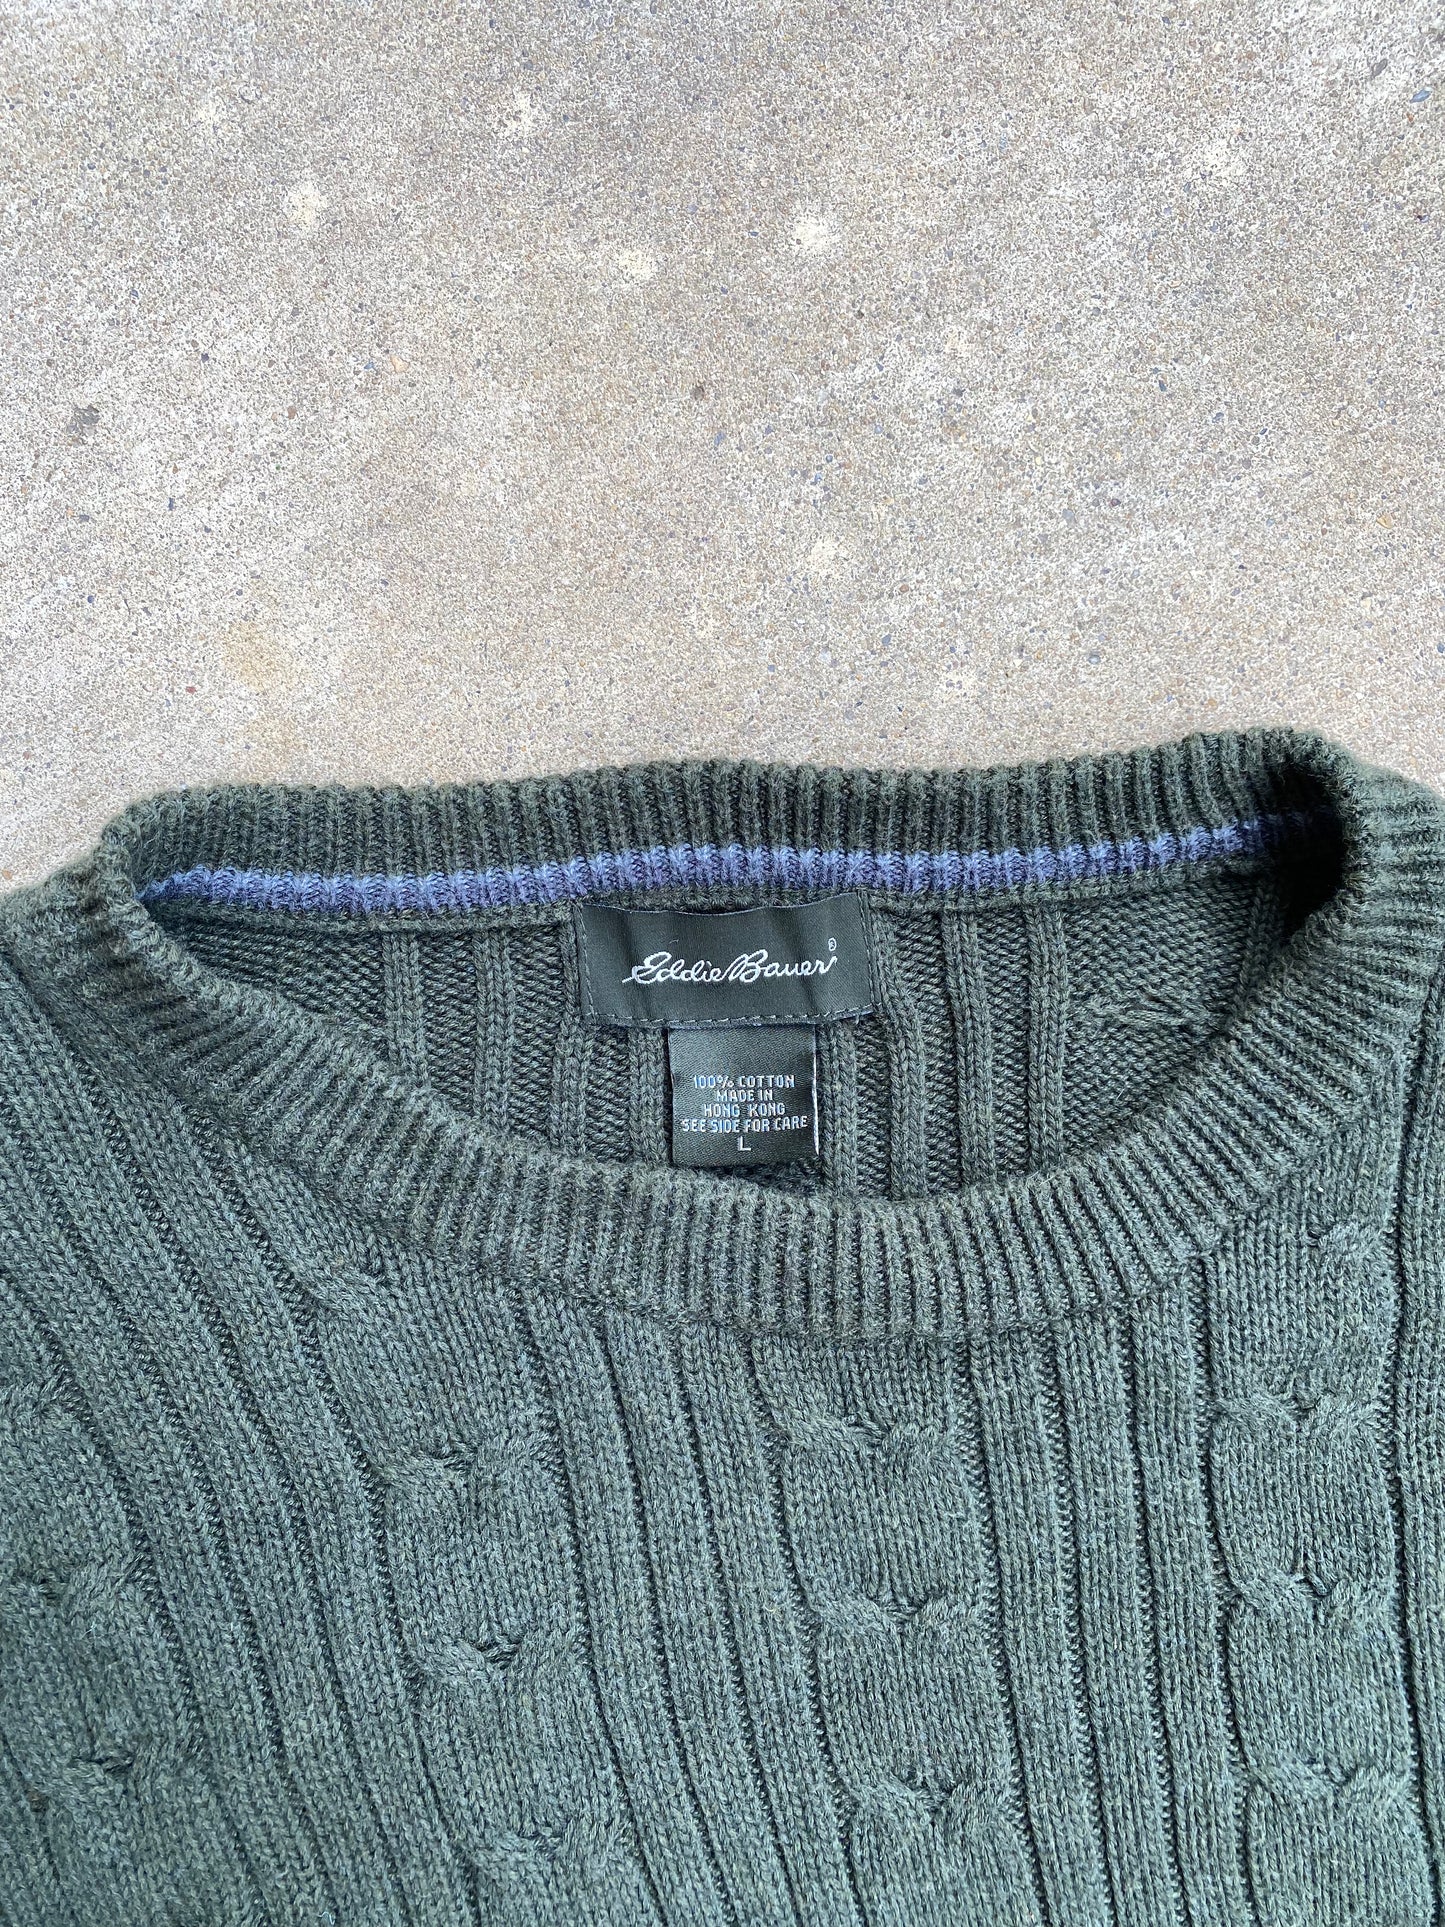 Eddie Bauer Green Cableknit Cotton Sweater - Brimm Archive Wardrobe Research